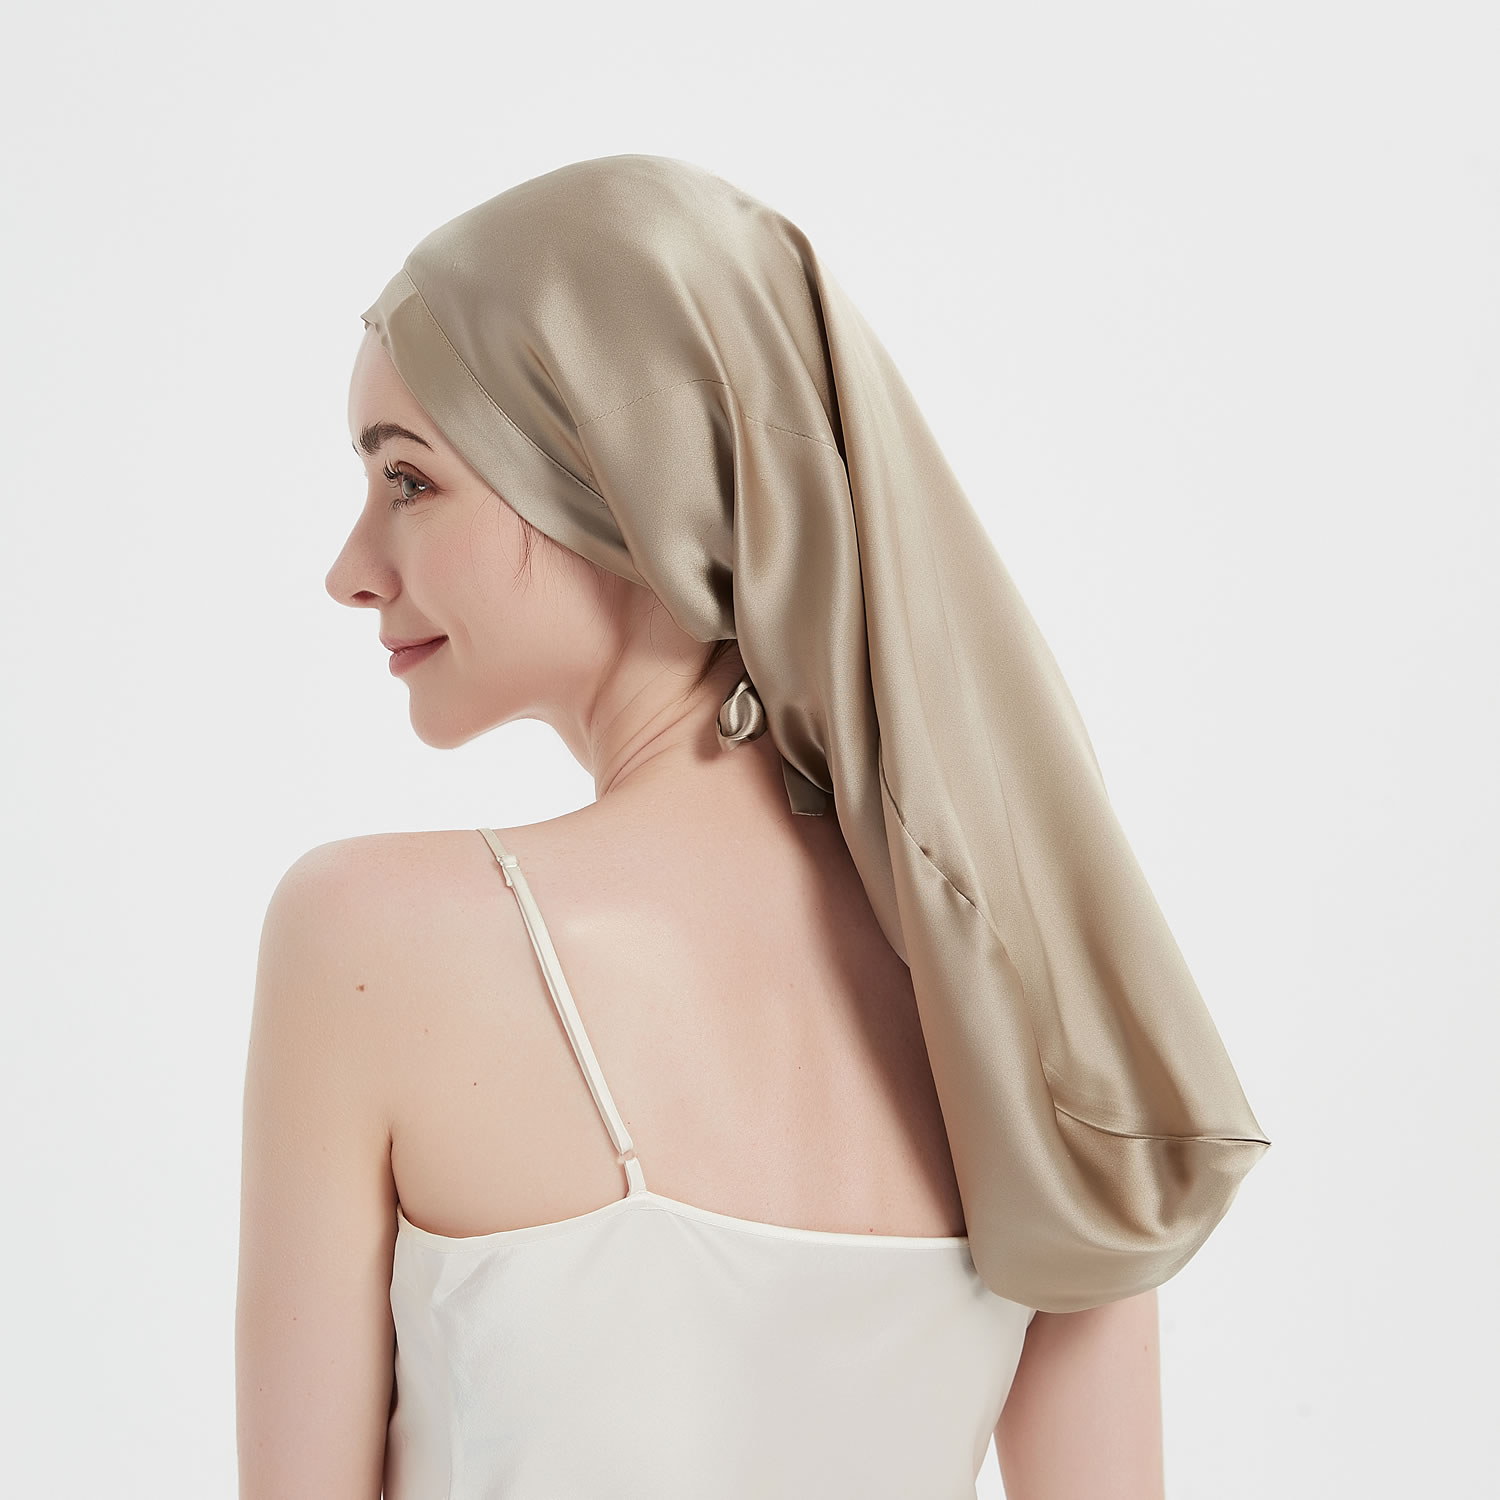 RachelSilk 100% Silk Bonnet Silk Sleep Cap Silk Hair Wrap Breathable with Ribbon for Hair Care - Bright Coffee